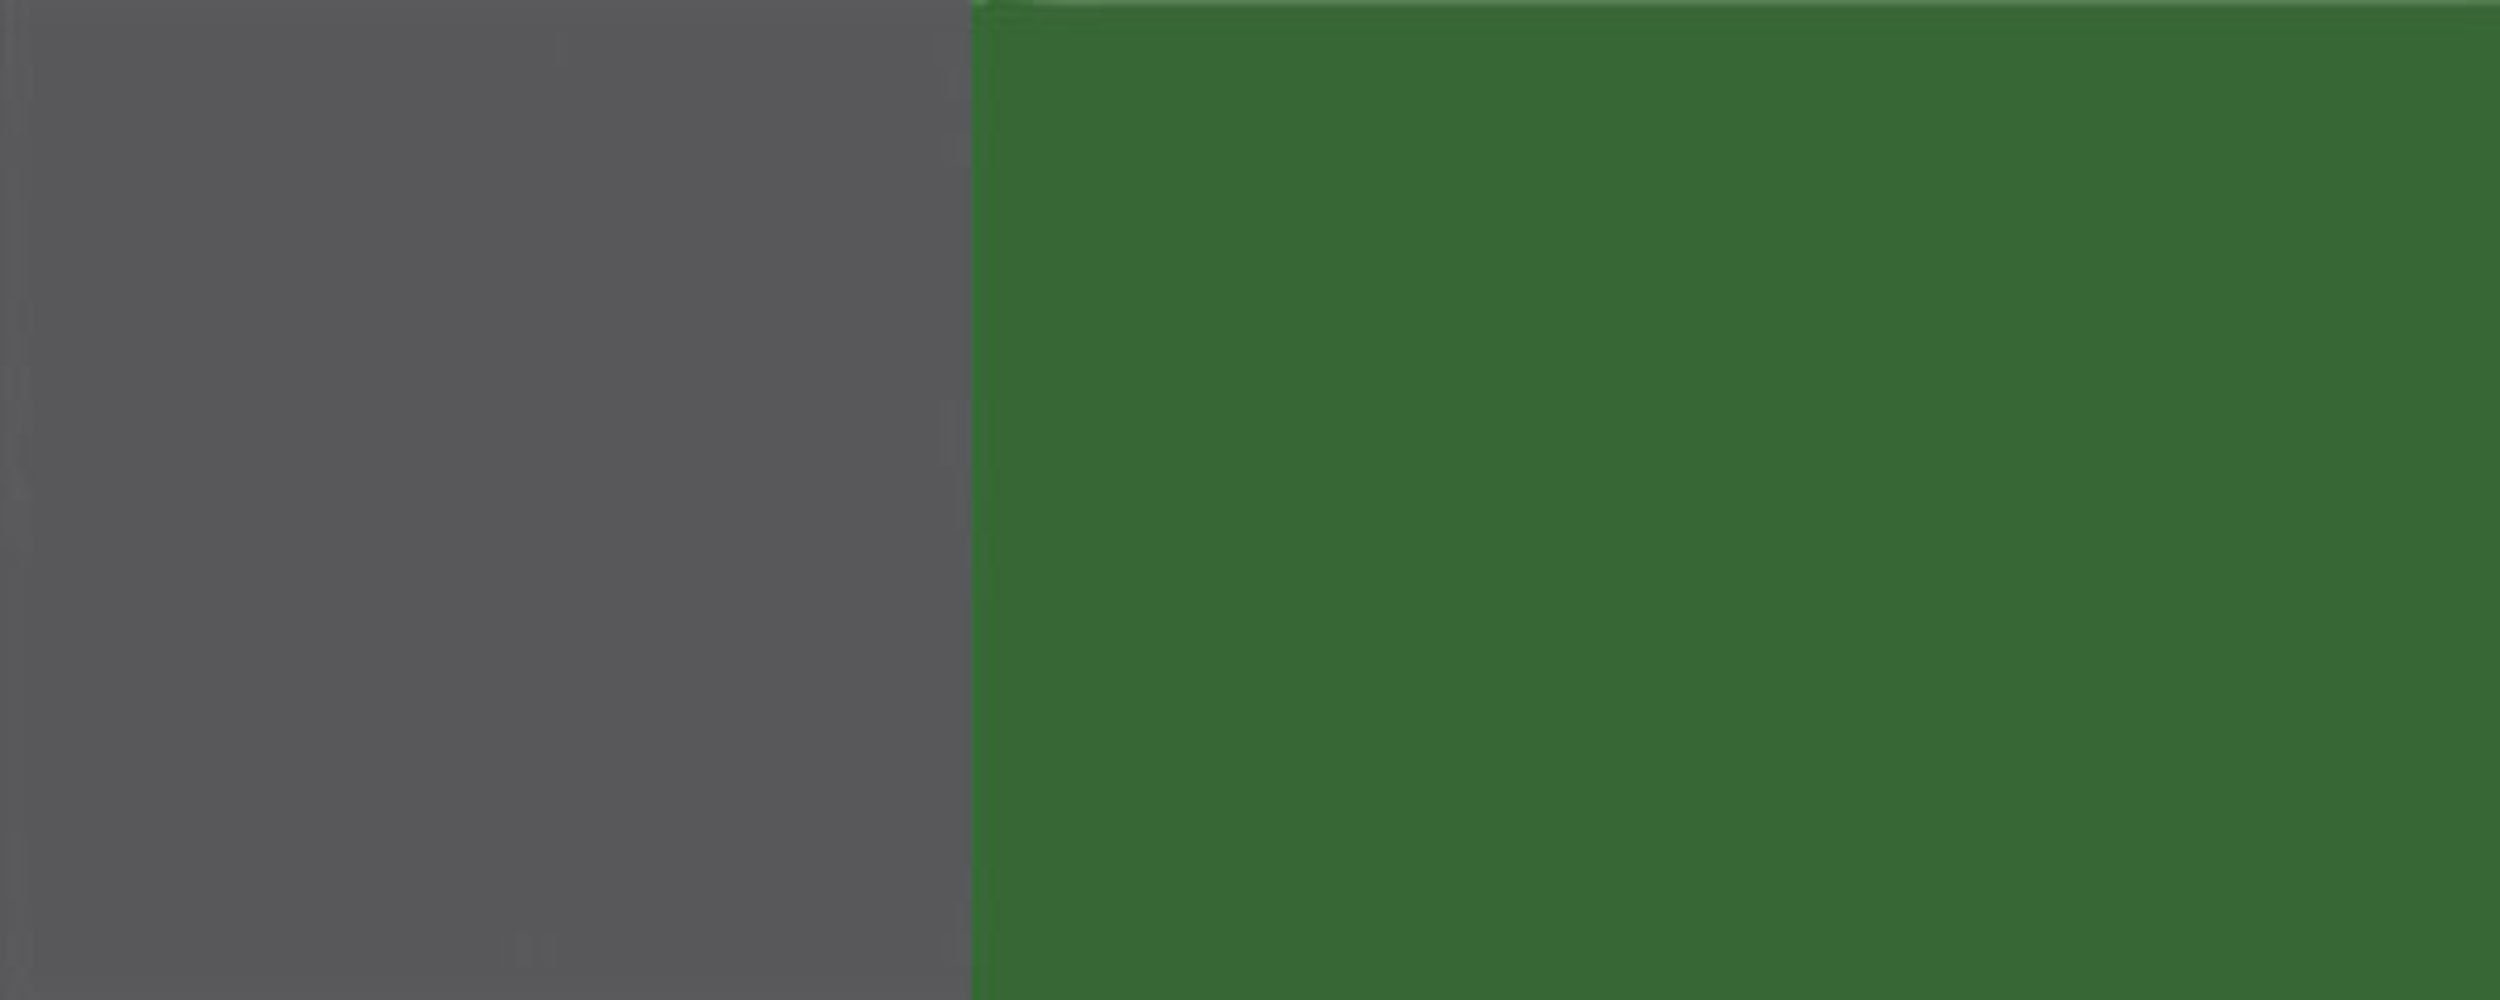 40cm smaragdgrün Feldmann-Wohnen 6001 Front-, Hochglanz 2 wählbar Metallkörben grifflos Ausführung Korpusfarbe & Florence Hochschrank RAL (Florence)